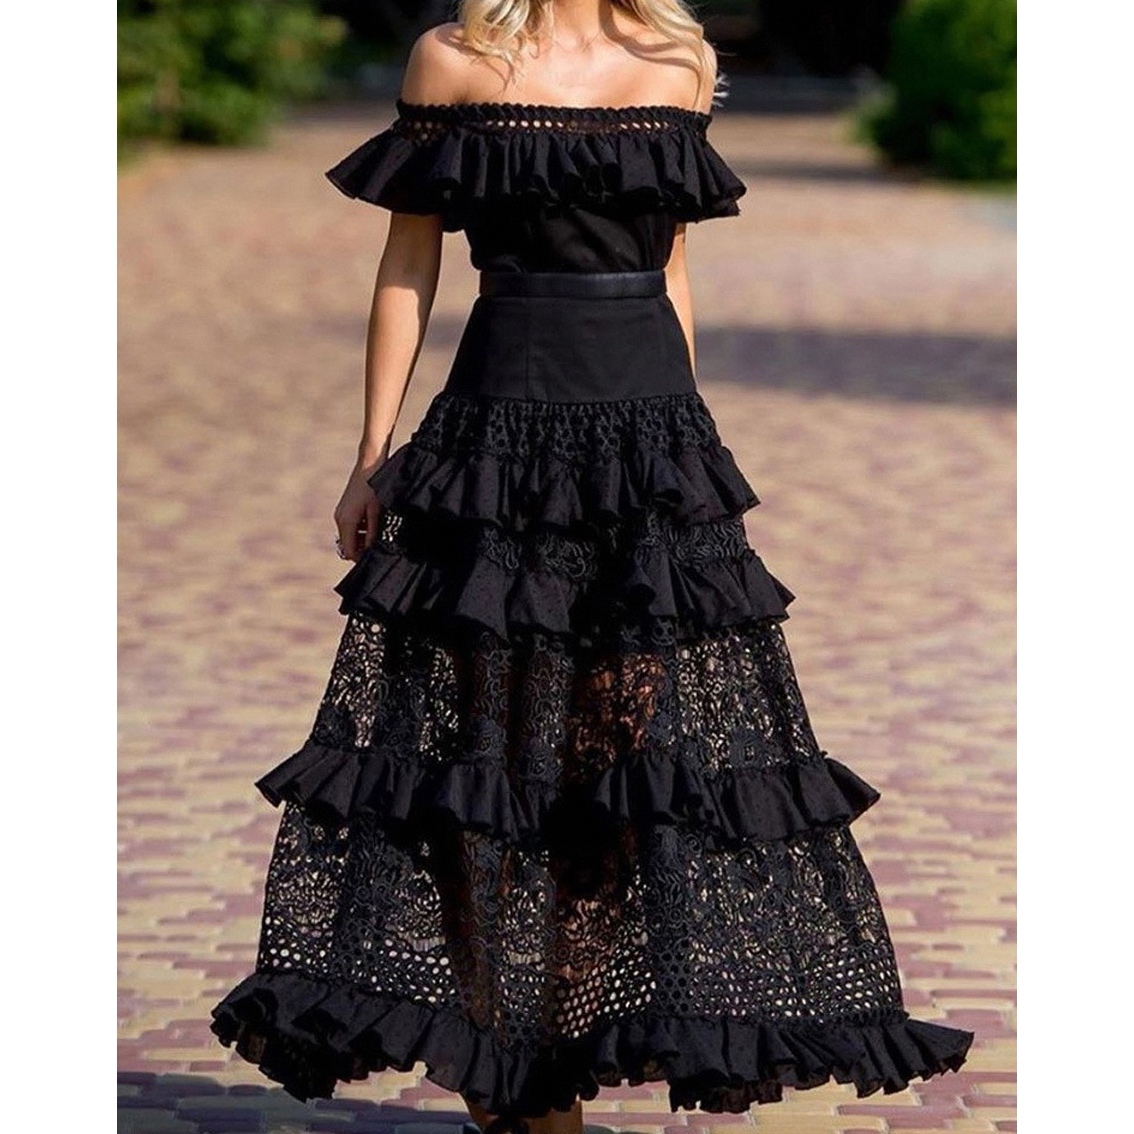 Sexy Lace Strap Maxi Dress - Black, Xl